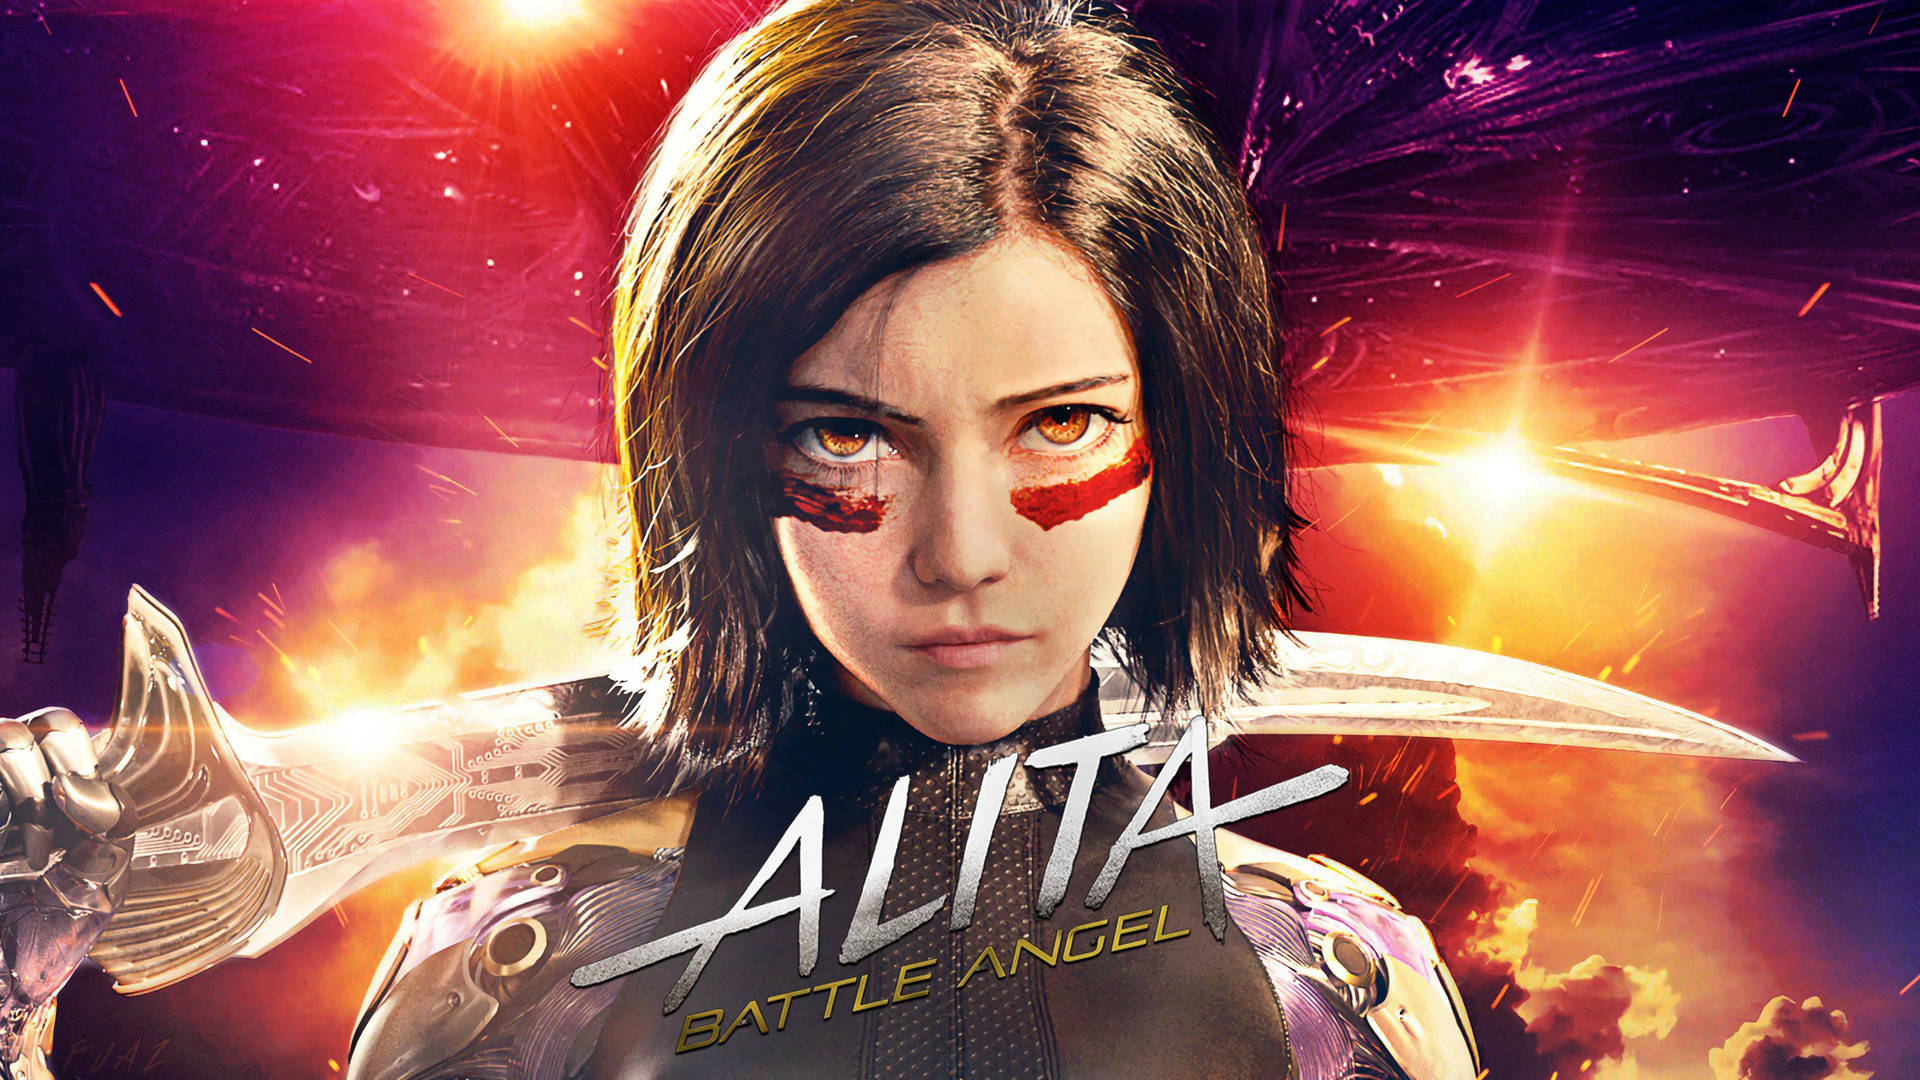 Alita: Battle Angel Poster Background